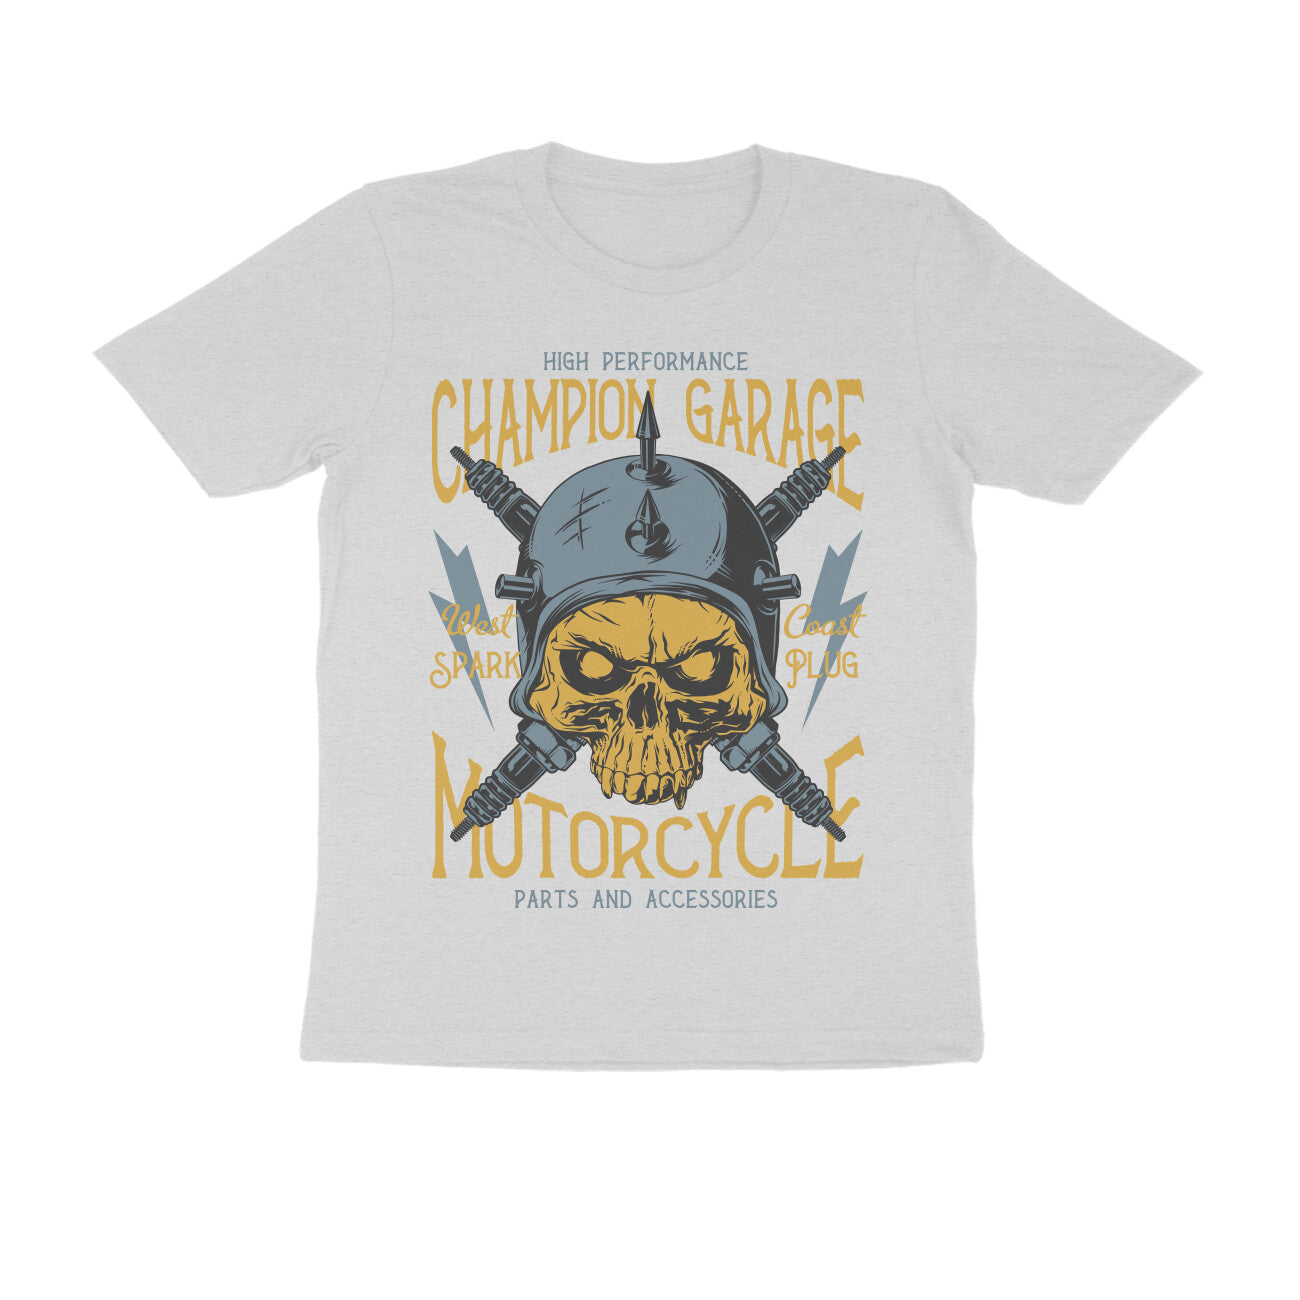 Champion Garage Motorcycle - Spark Plug Skull Rider Art T-Shirt